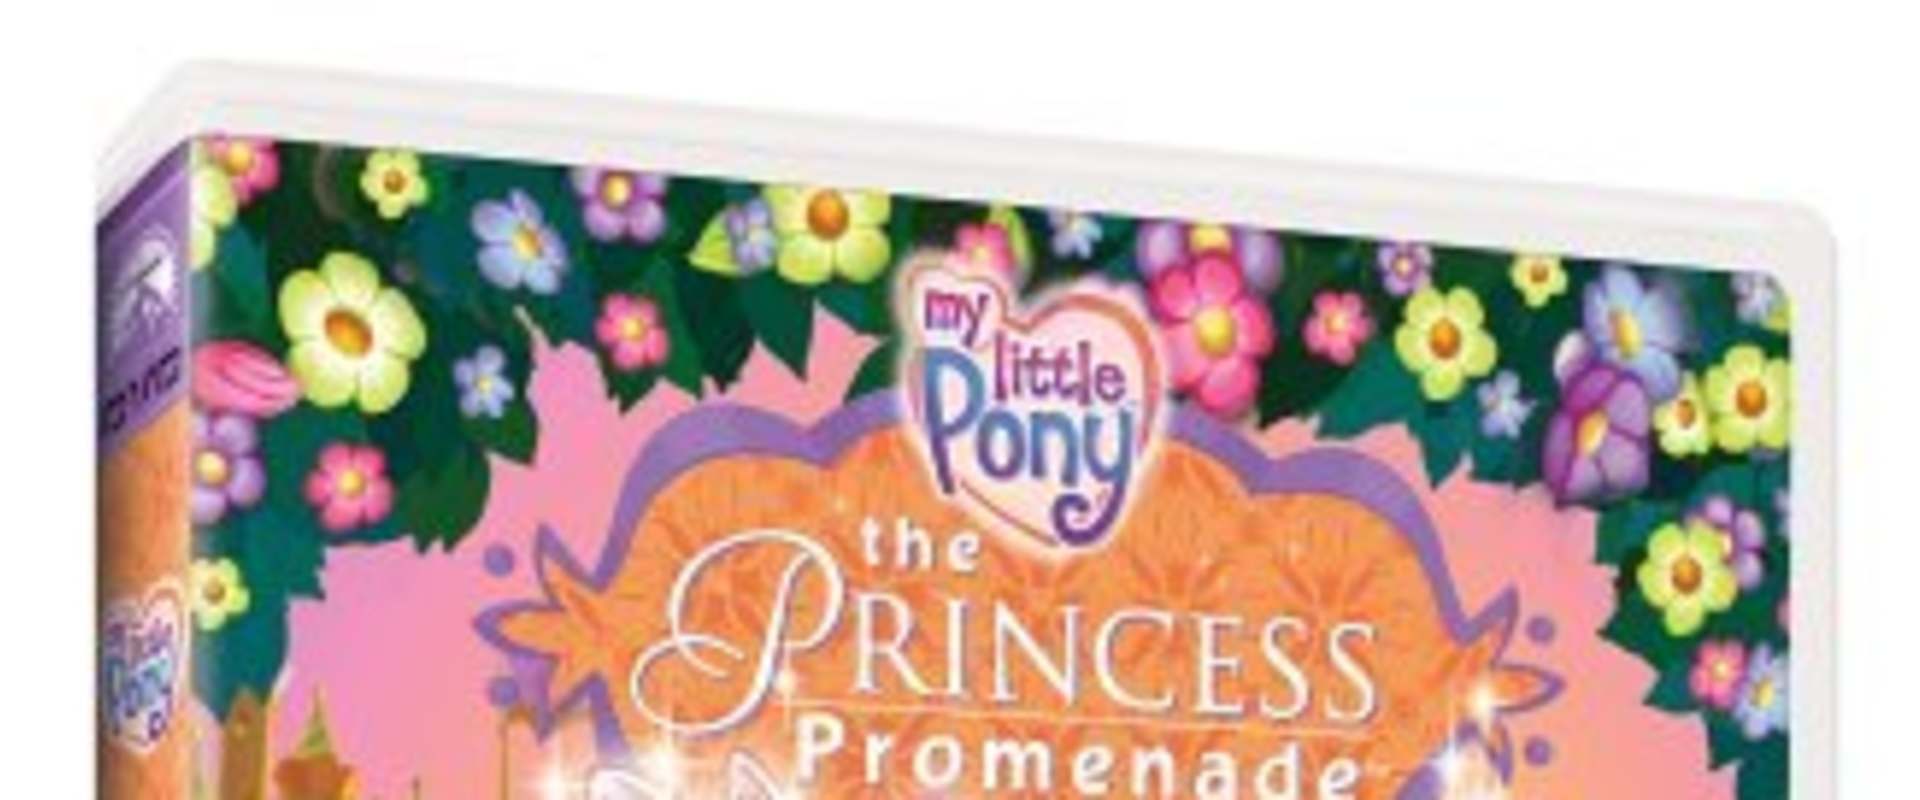 My Little Pony: The Princess Promenade background 1